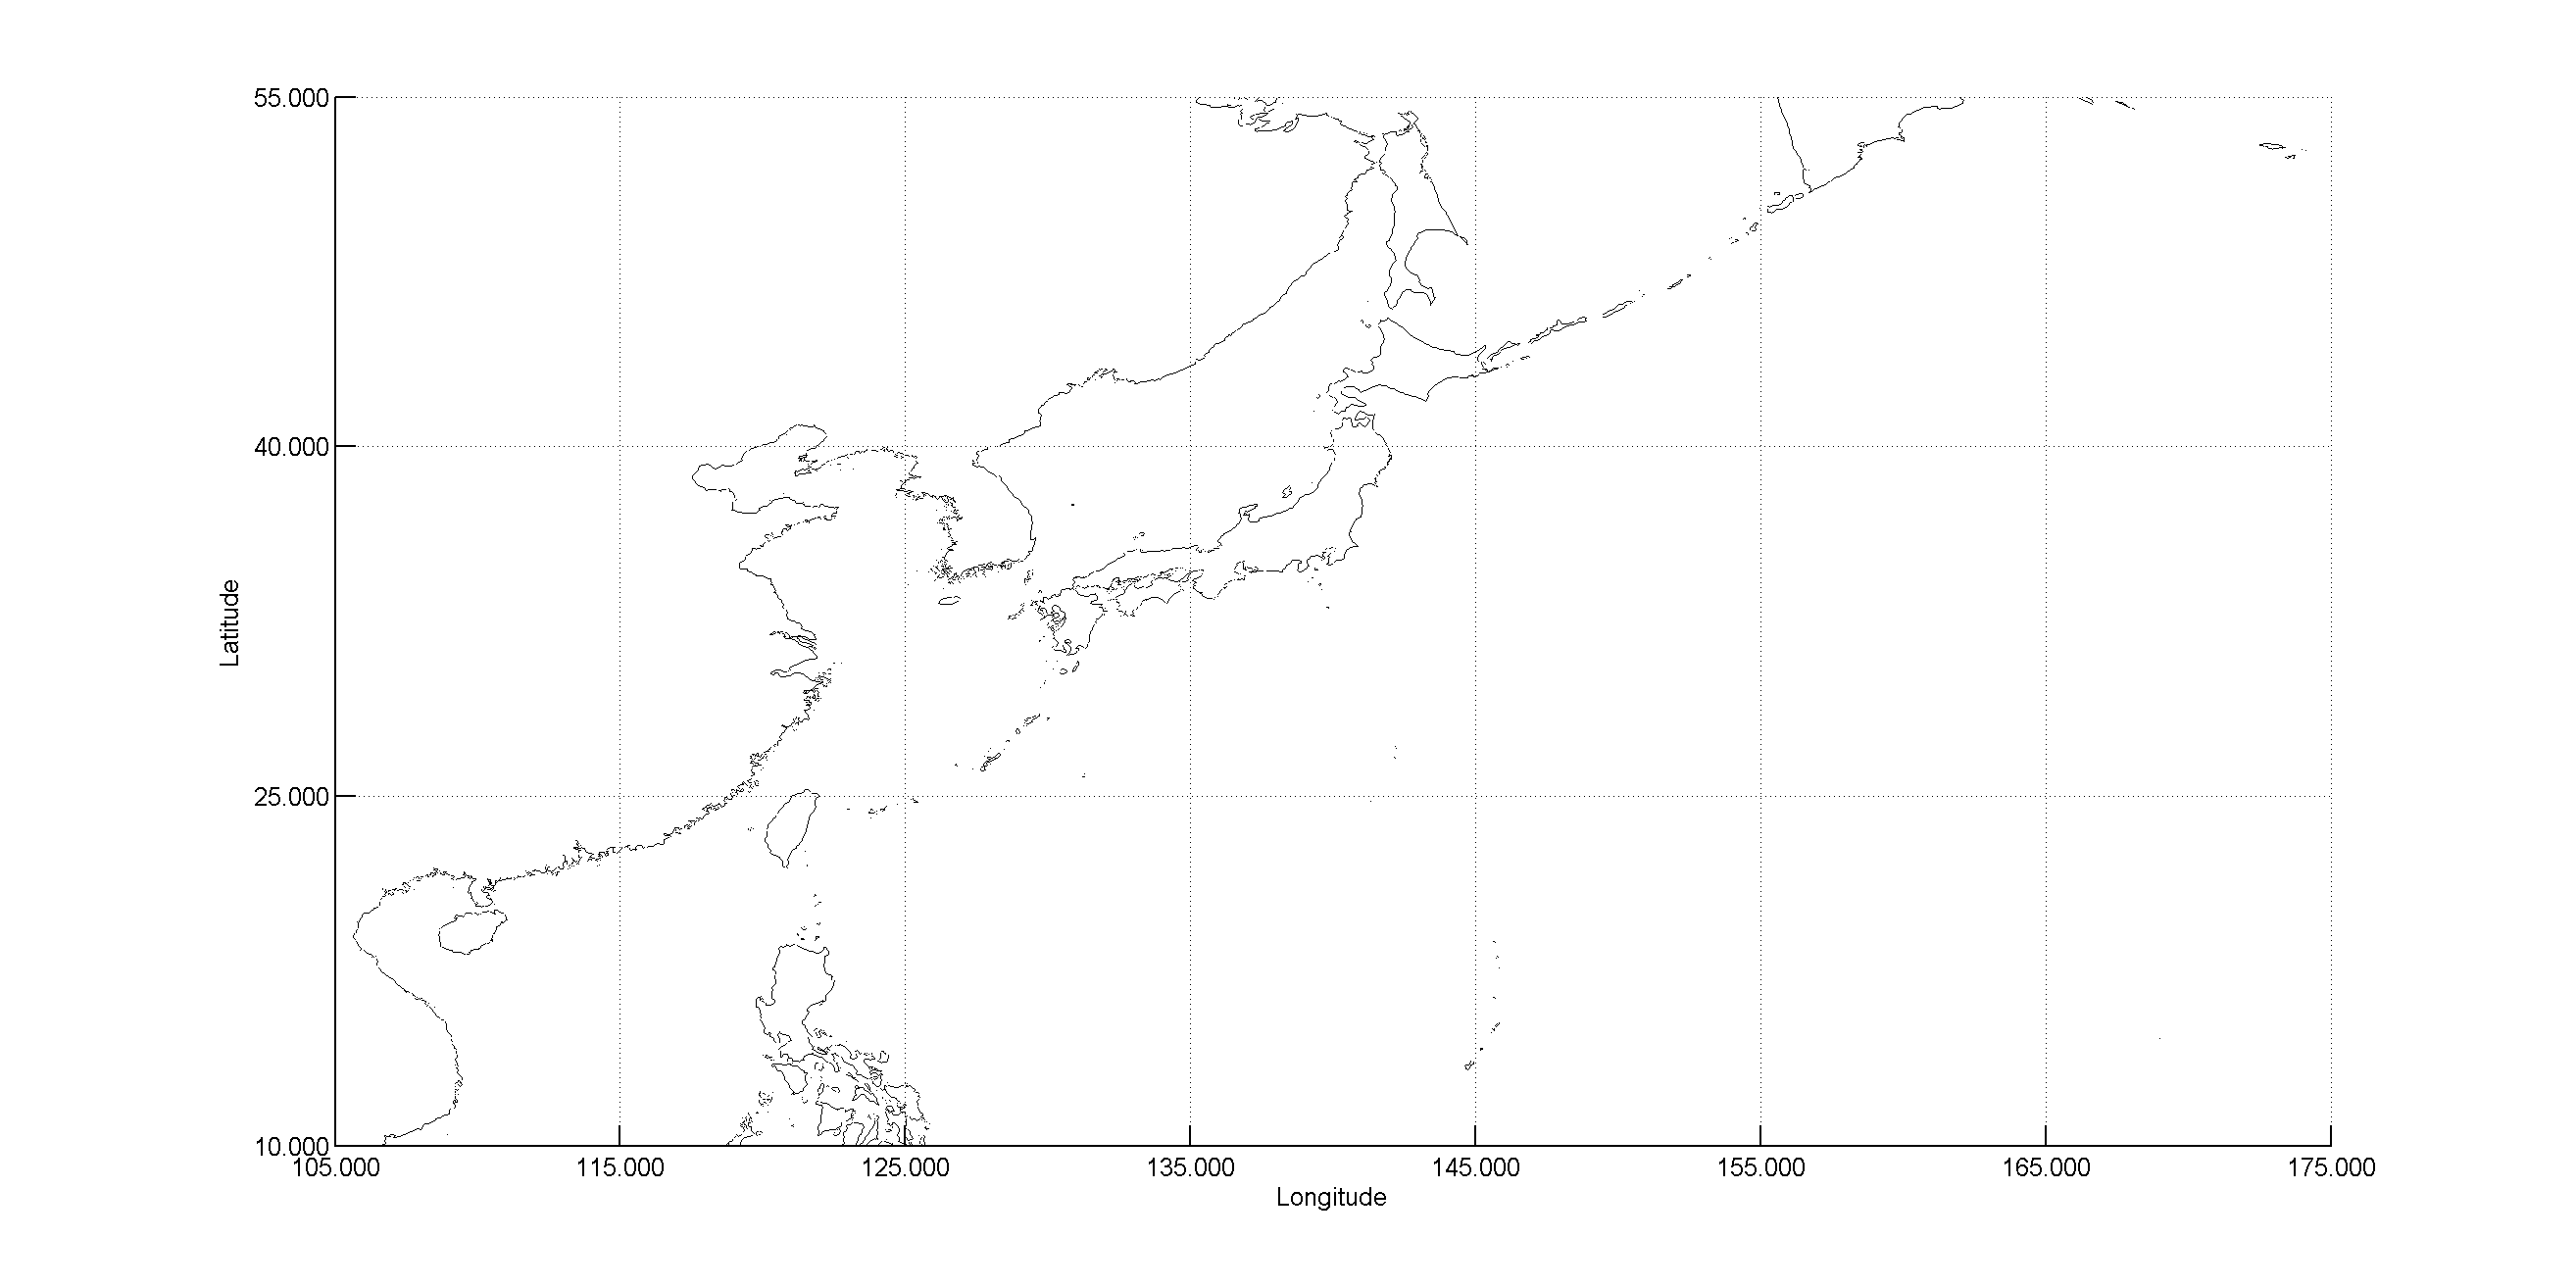 CYCLE_220 - Japan Descending passes